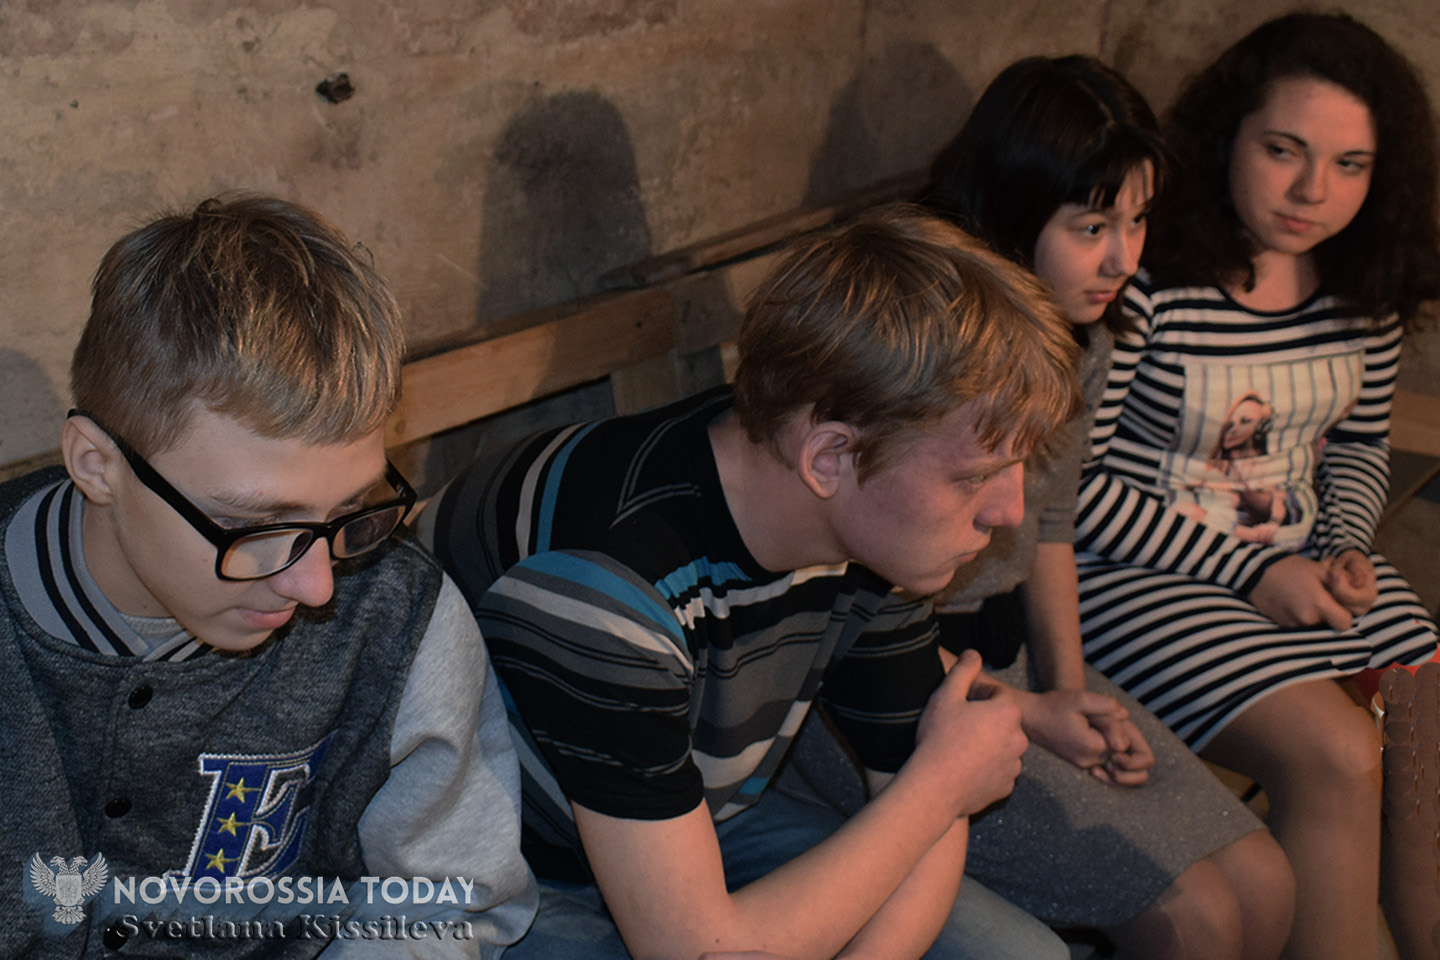 Donbass Schoolchildren Under Ukrainian Shelling